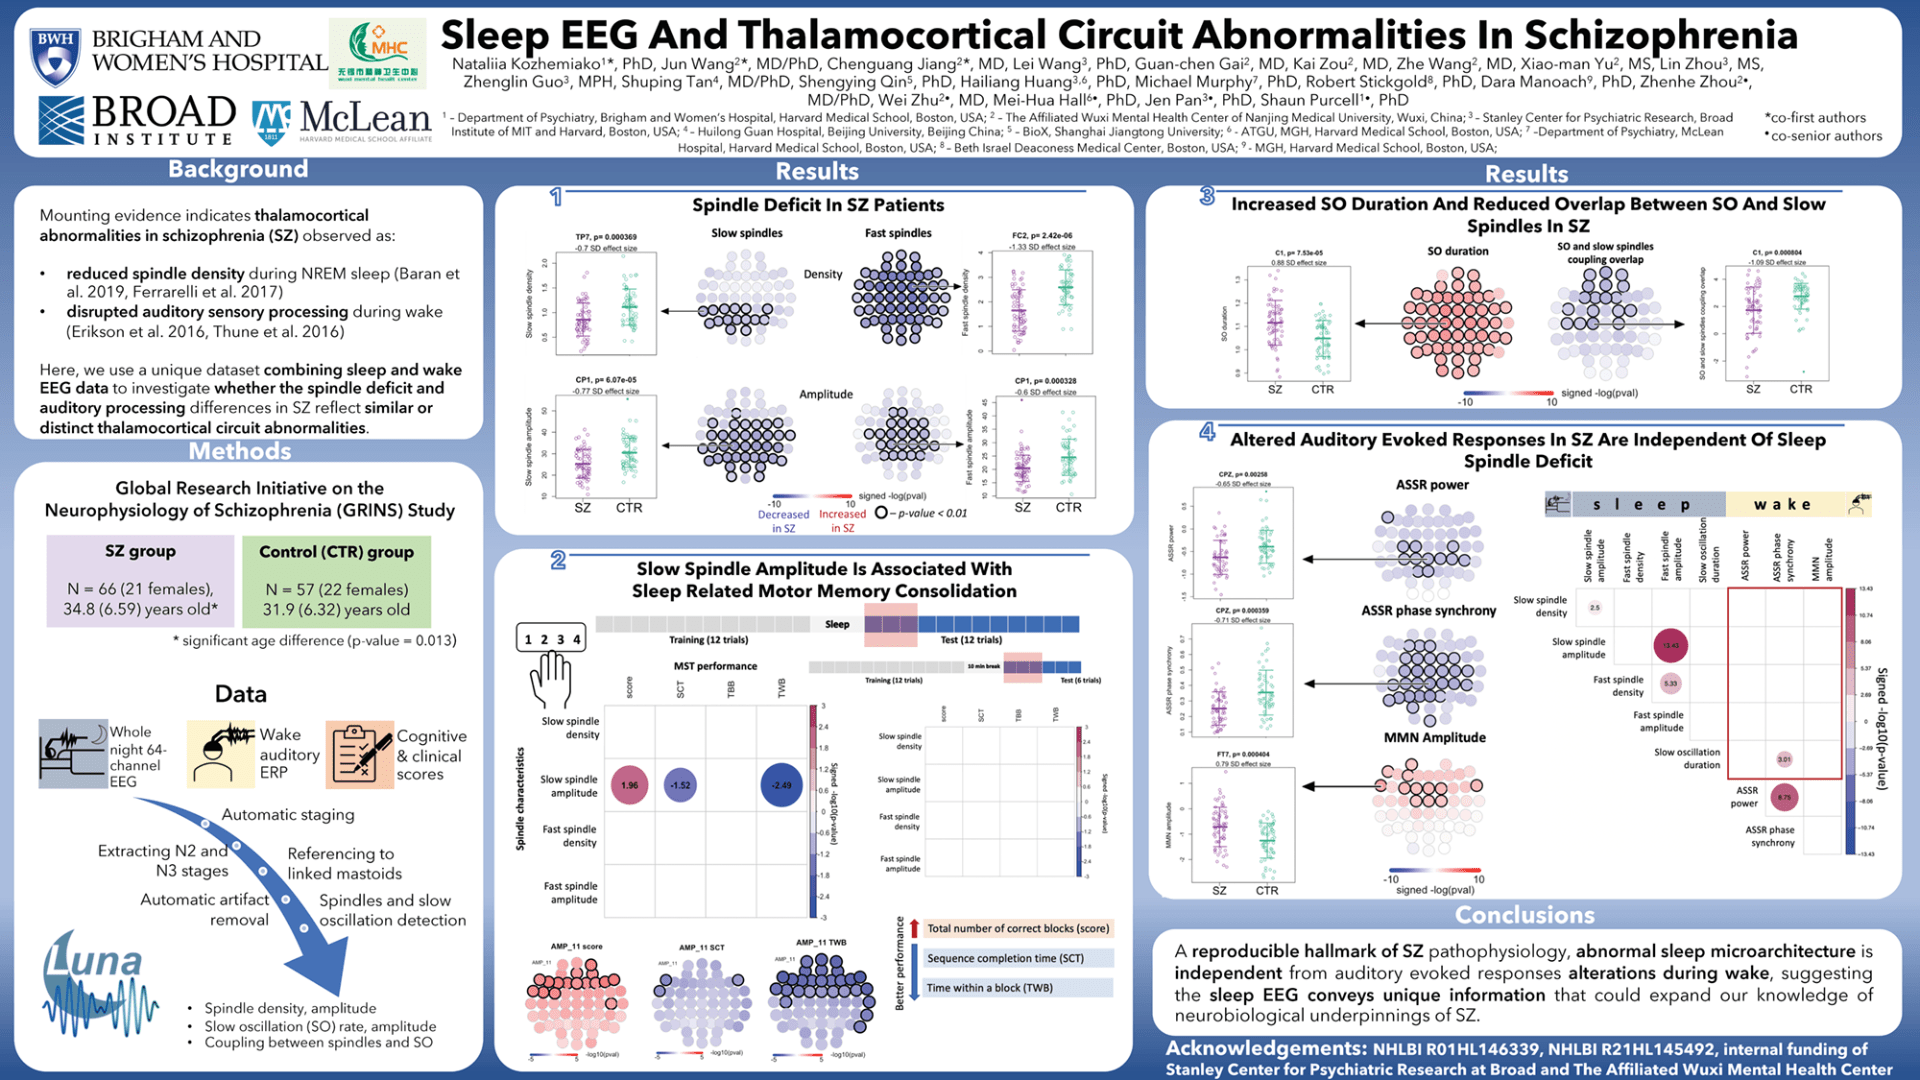 Sleep EEG and thalamocortical circuit abnormalities in schizophrenia